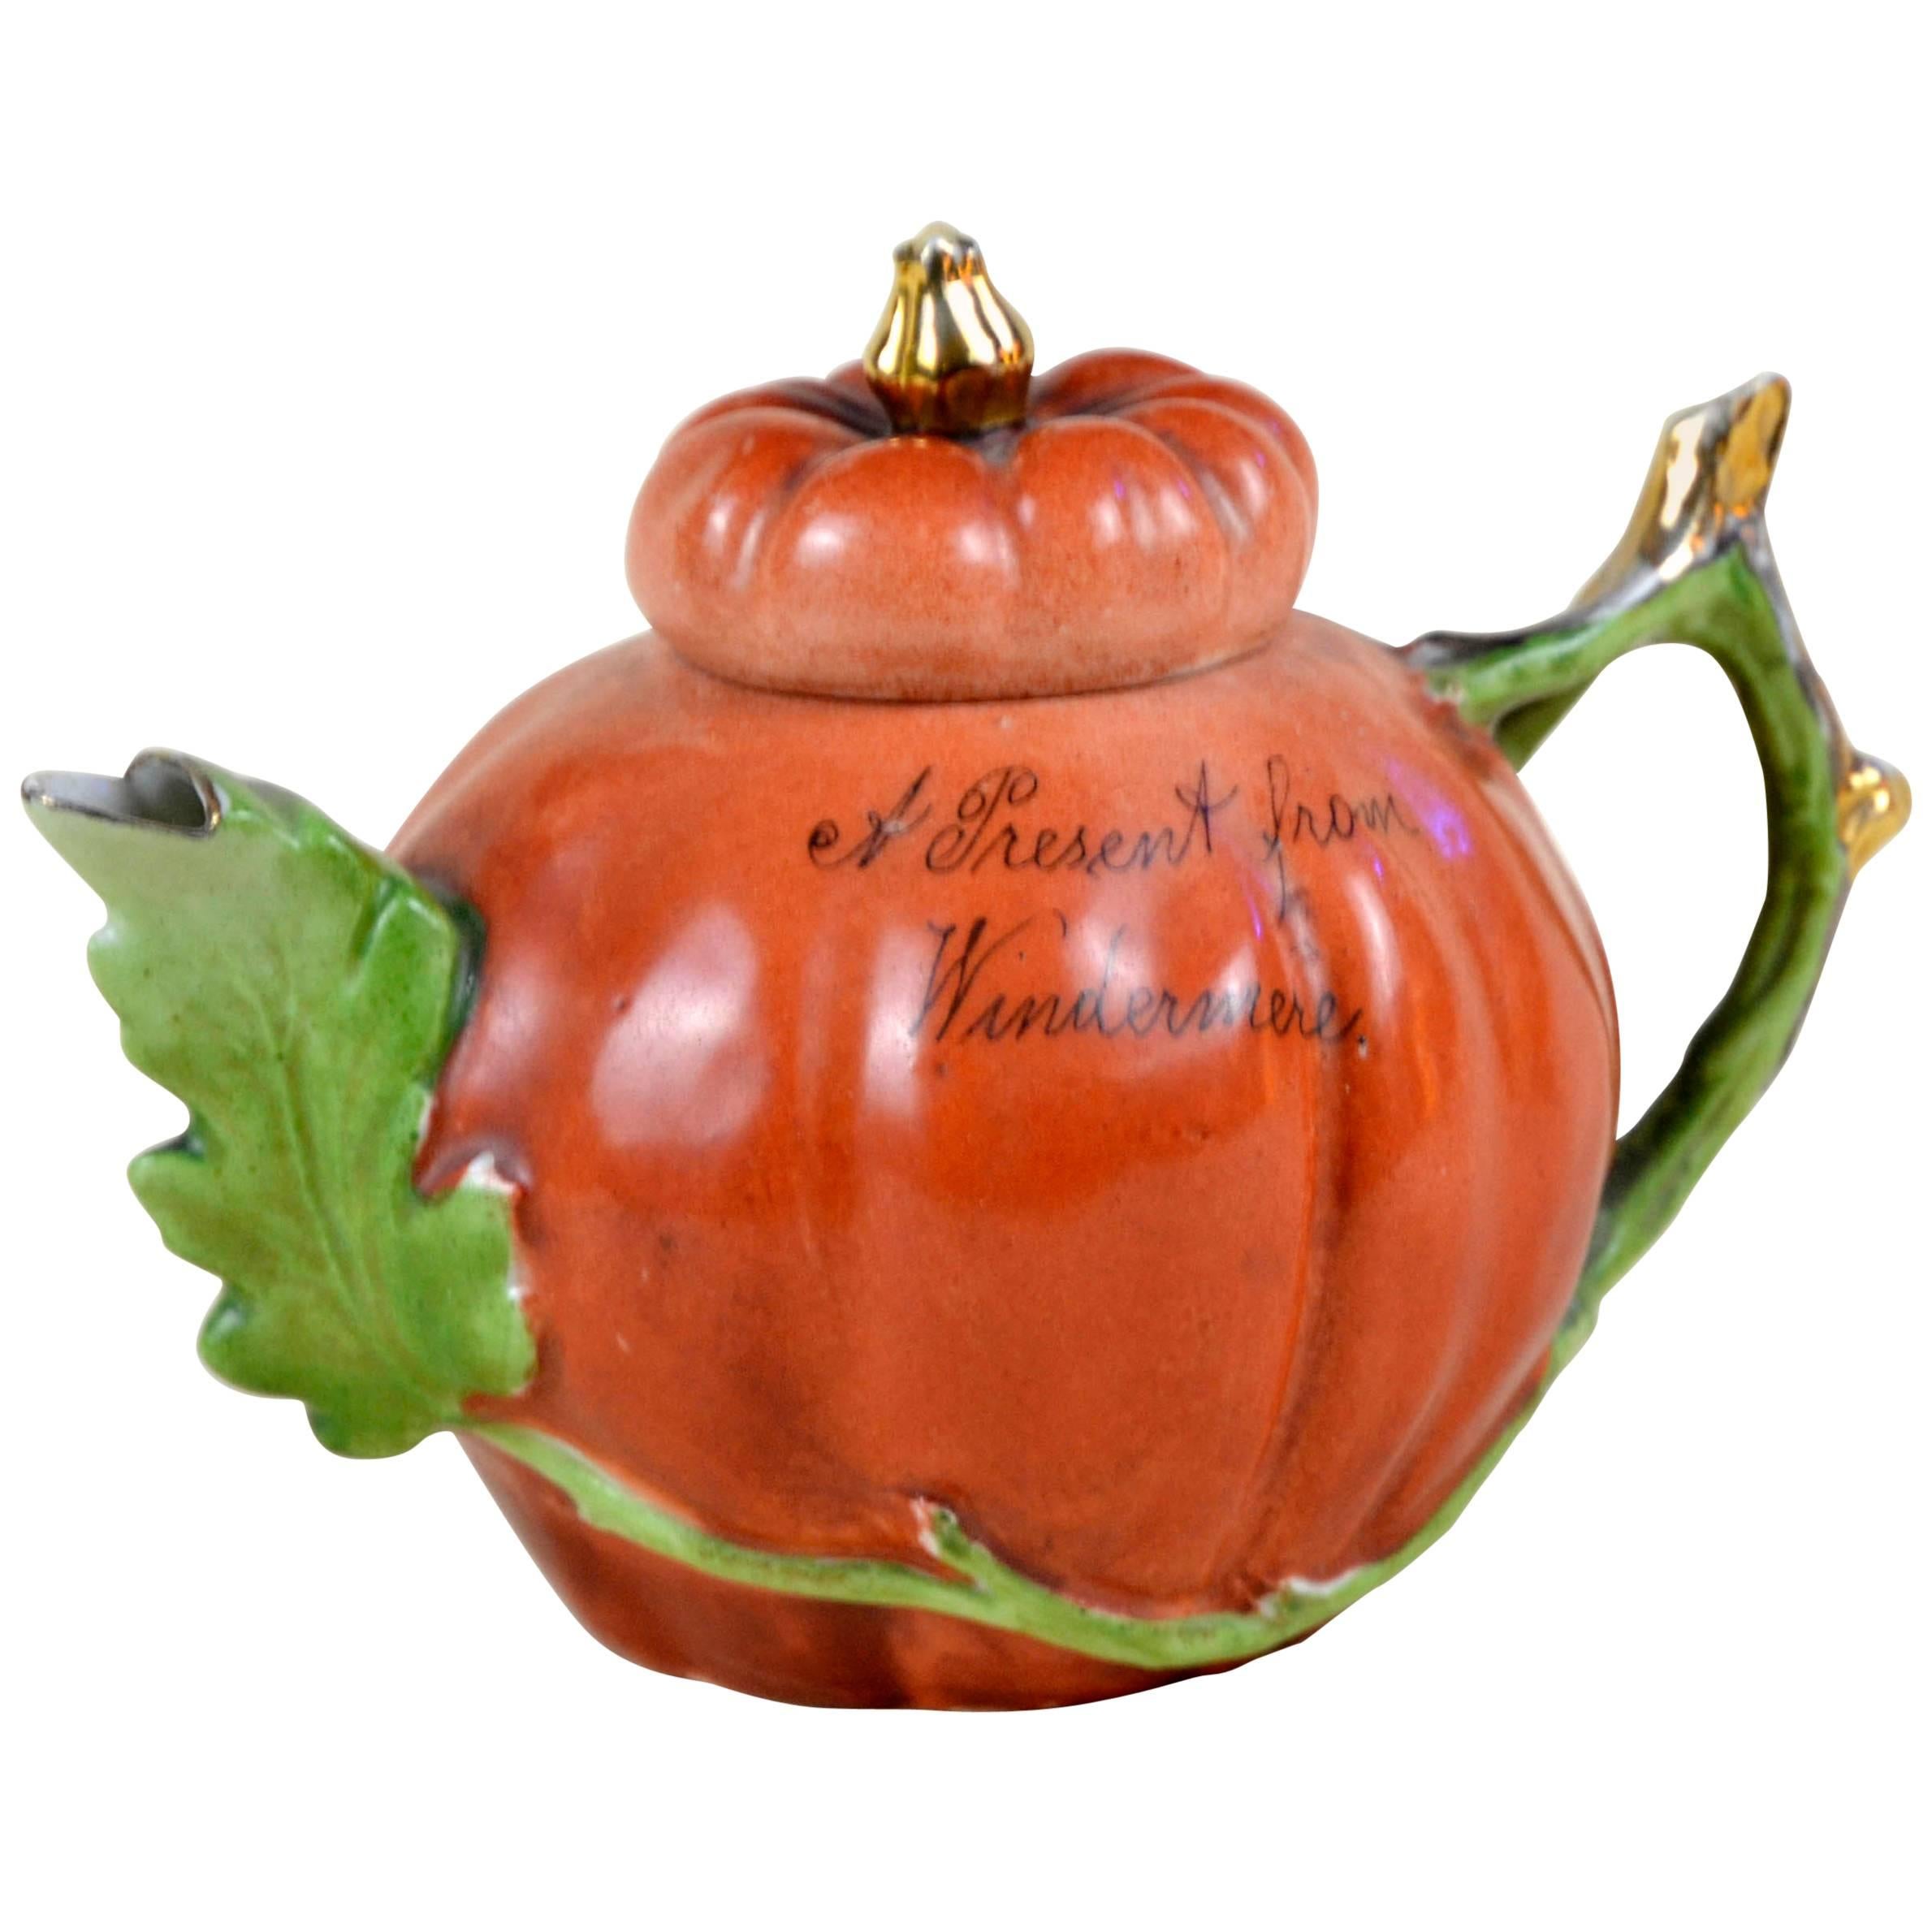 1900s Edwardian Porcelain Pumpkin Shaped Souvenir Teapot Made in England